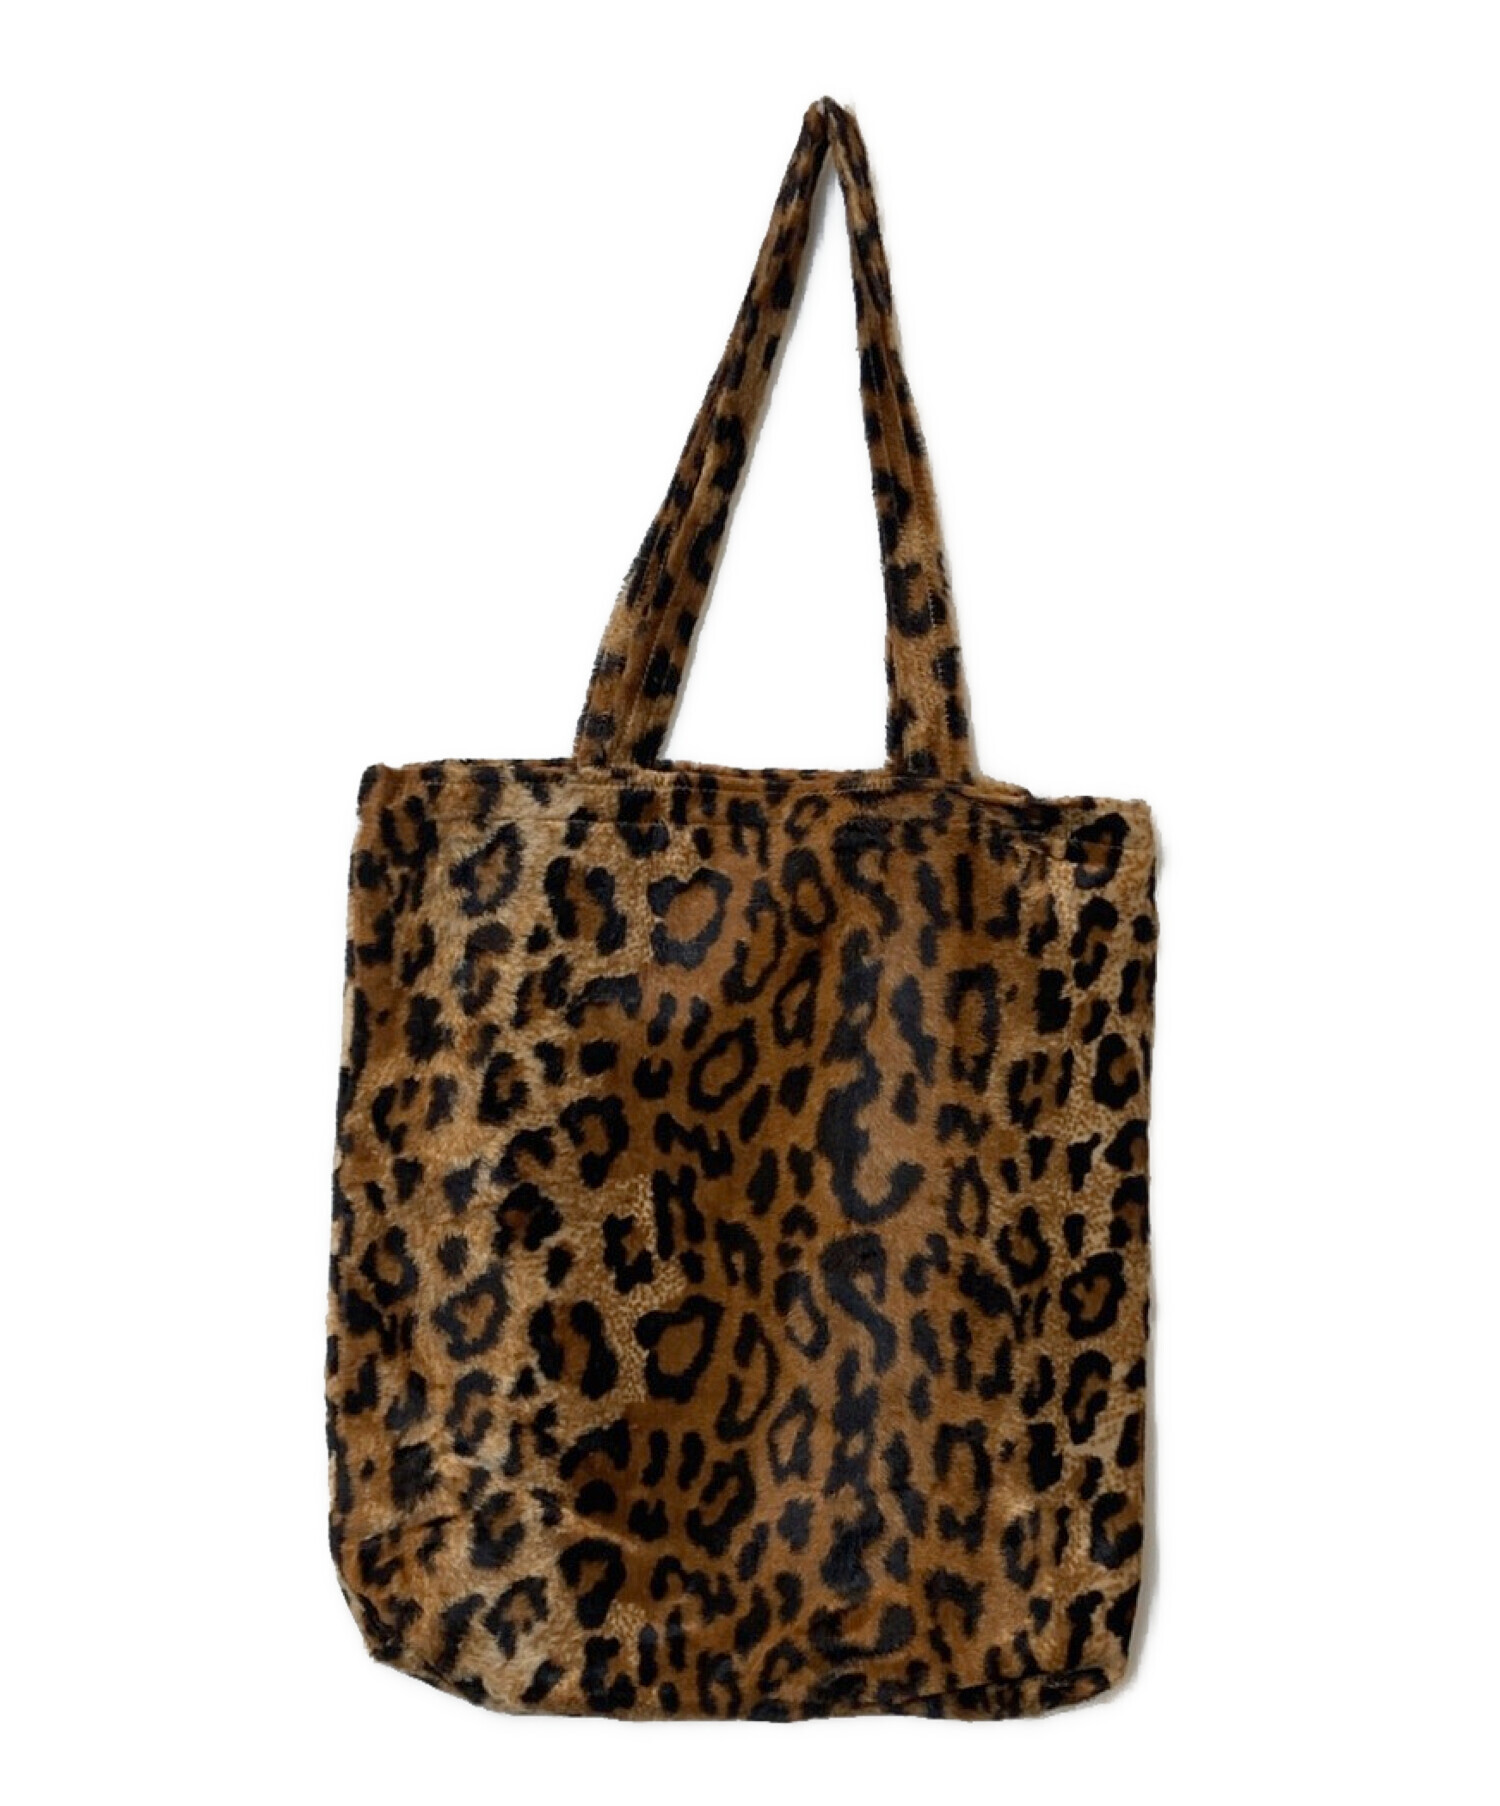 L'appartement (アパルトモン) Leopard Tote Bag